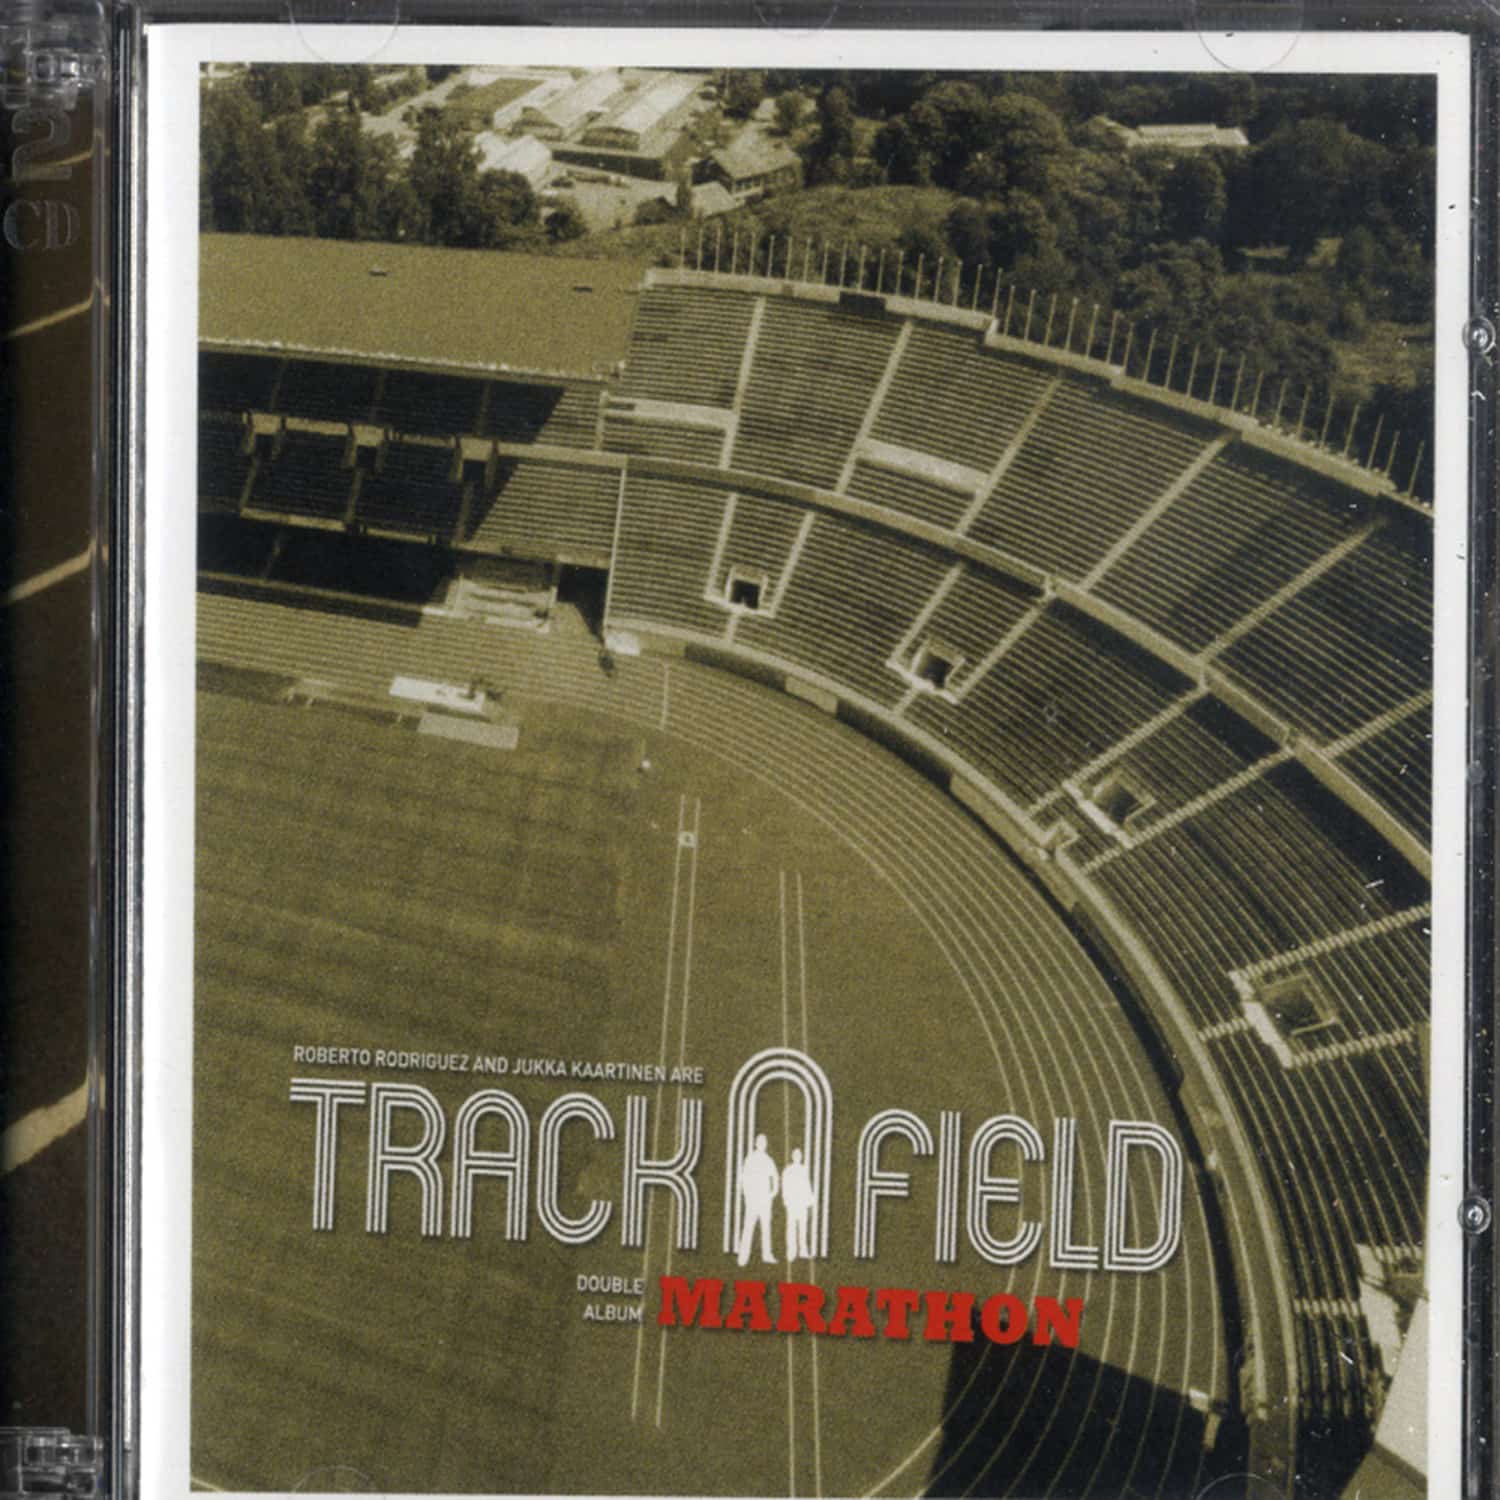 Track n Field - MARATHON 